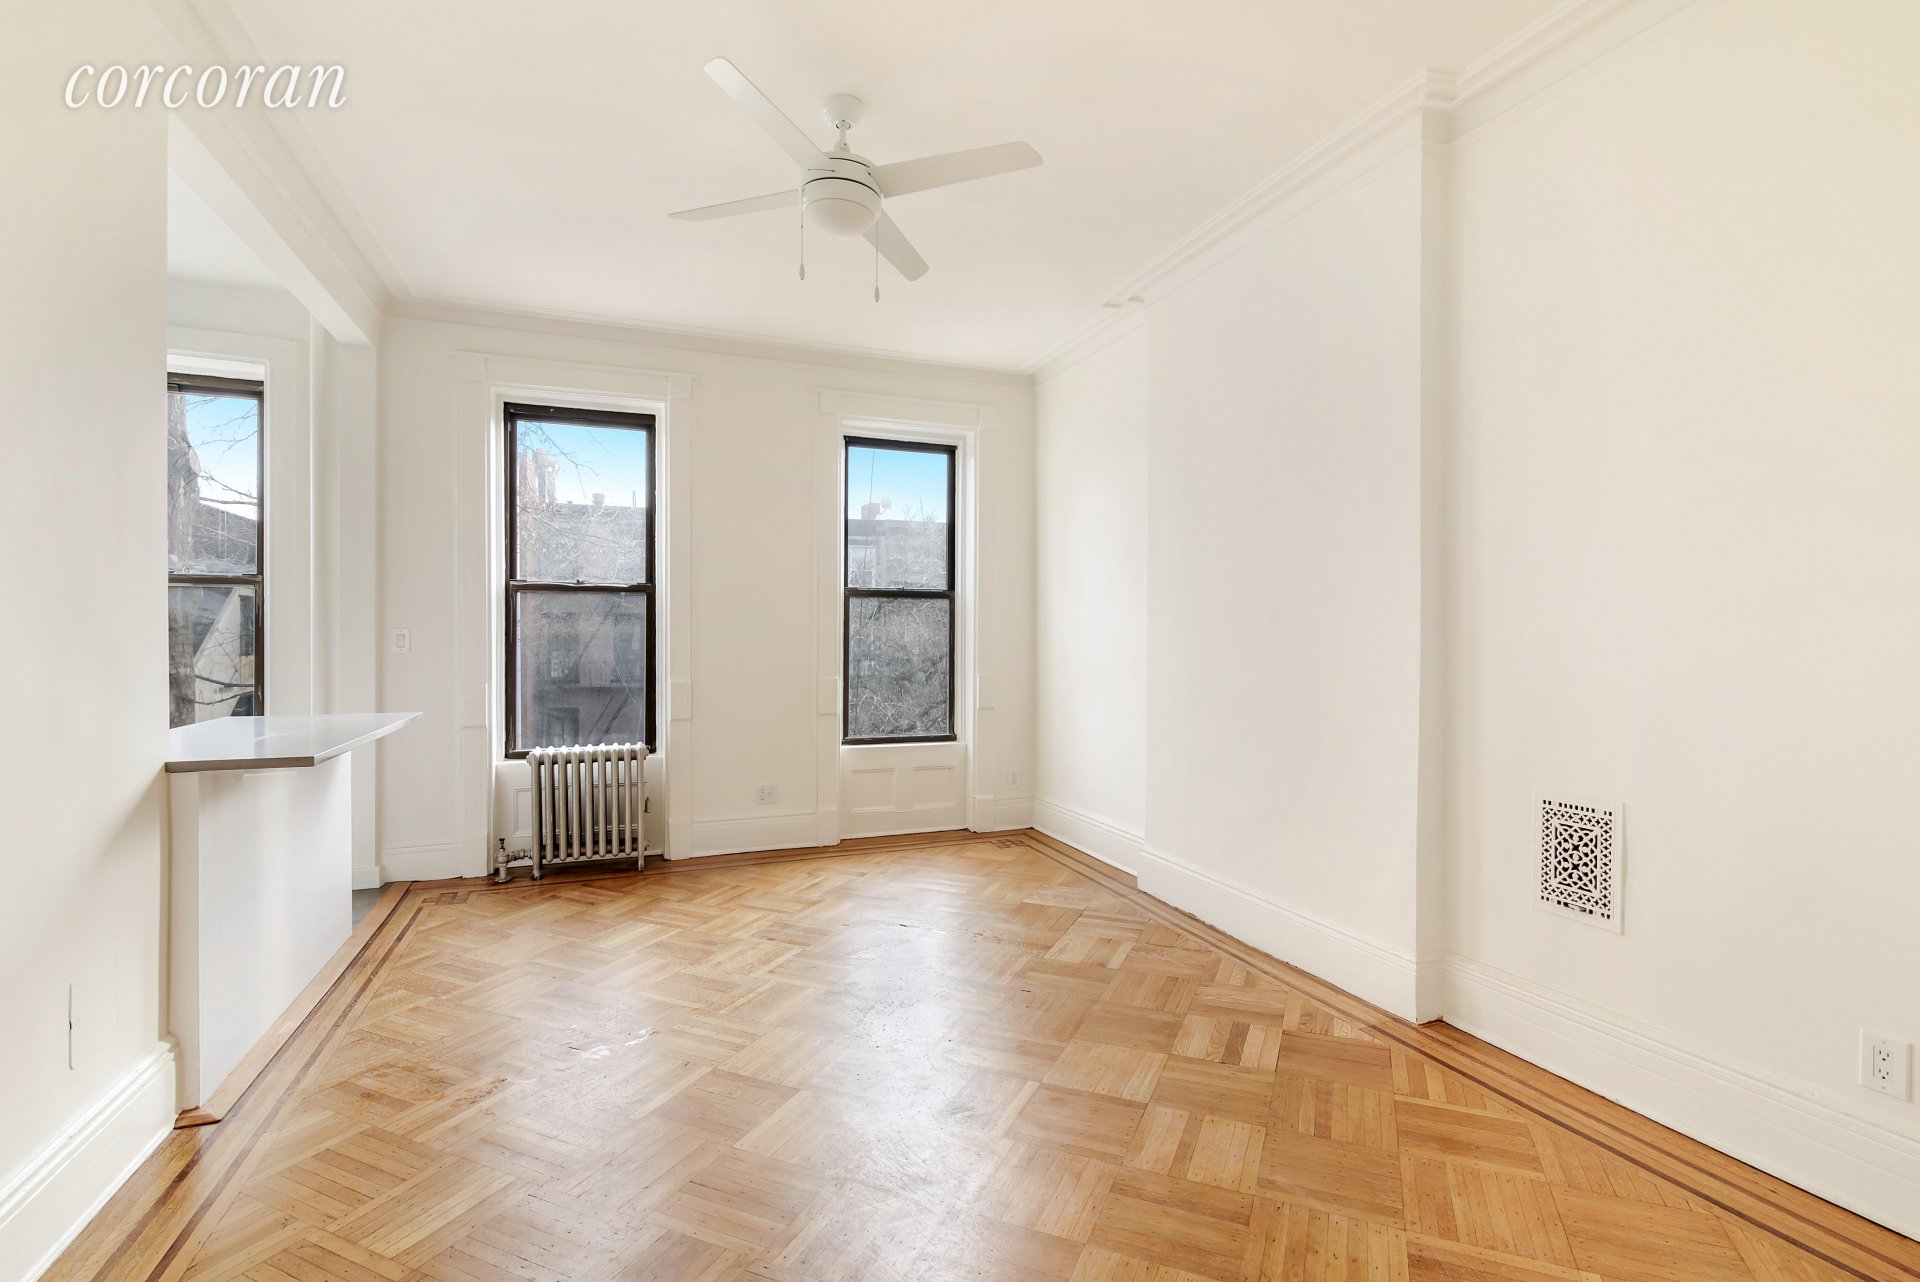 Ad Rental Apartment Brooklyn 11233 Ref 5826177